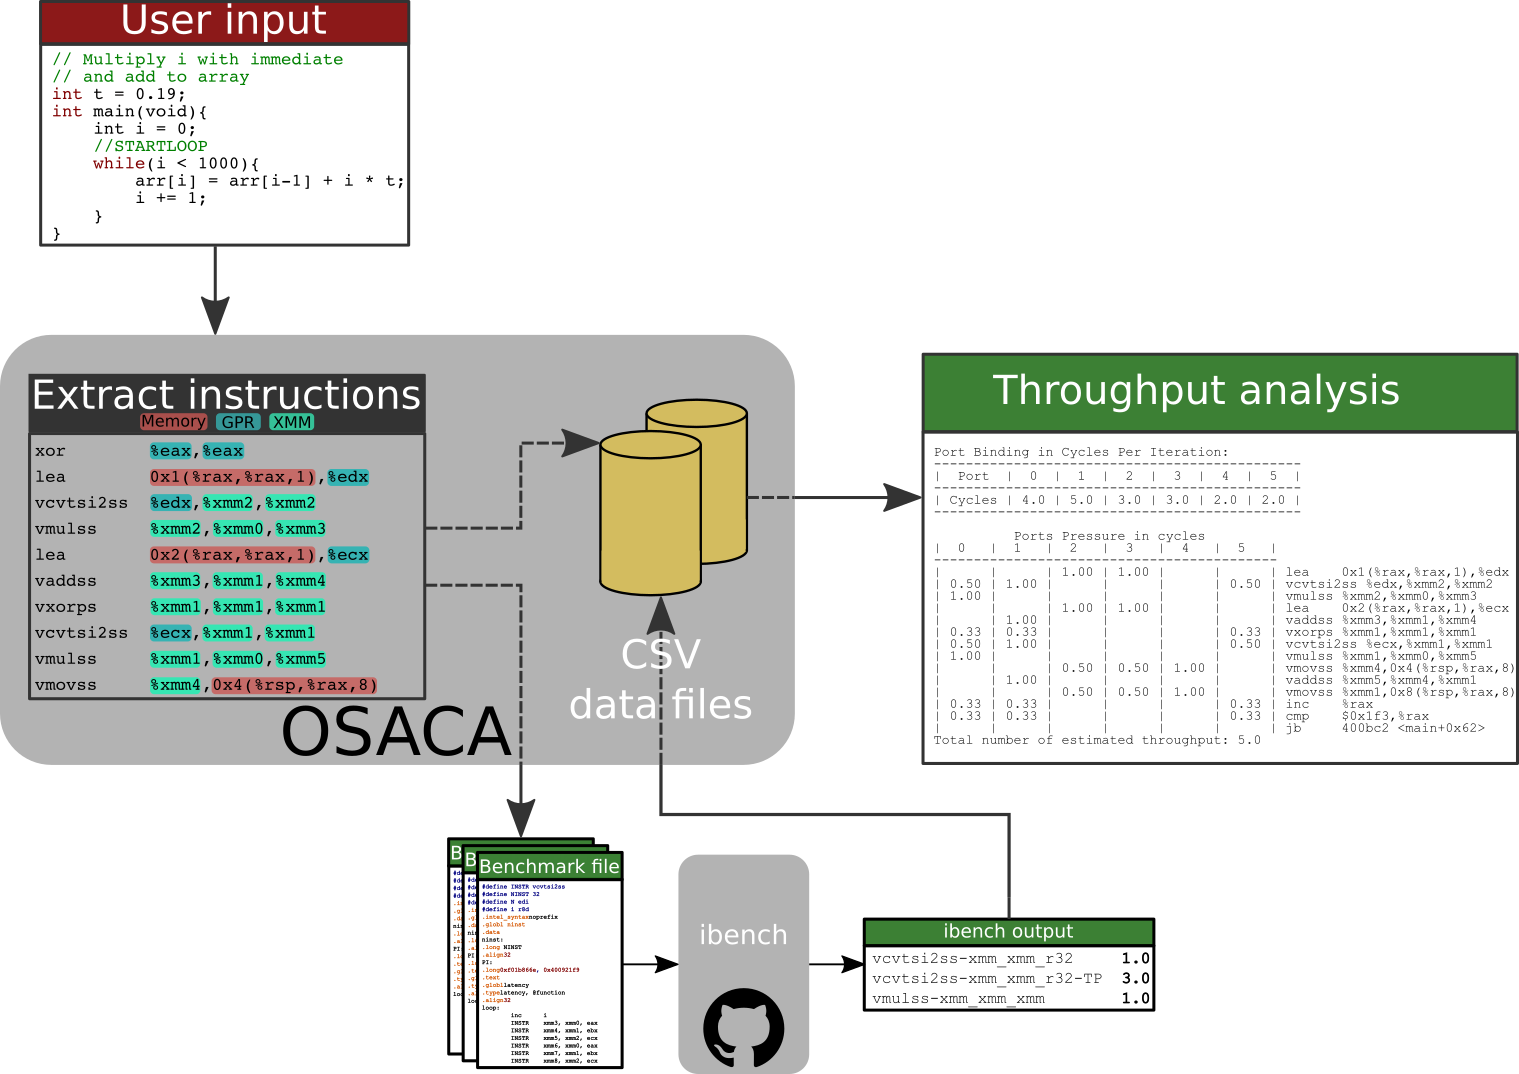 OSACA workflow